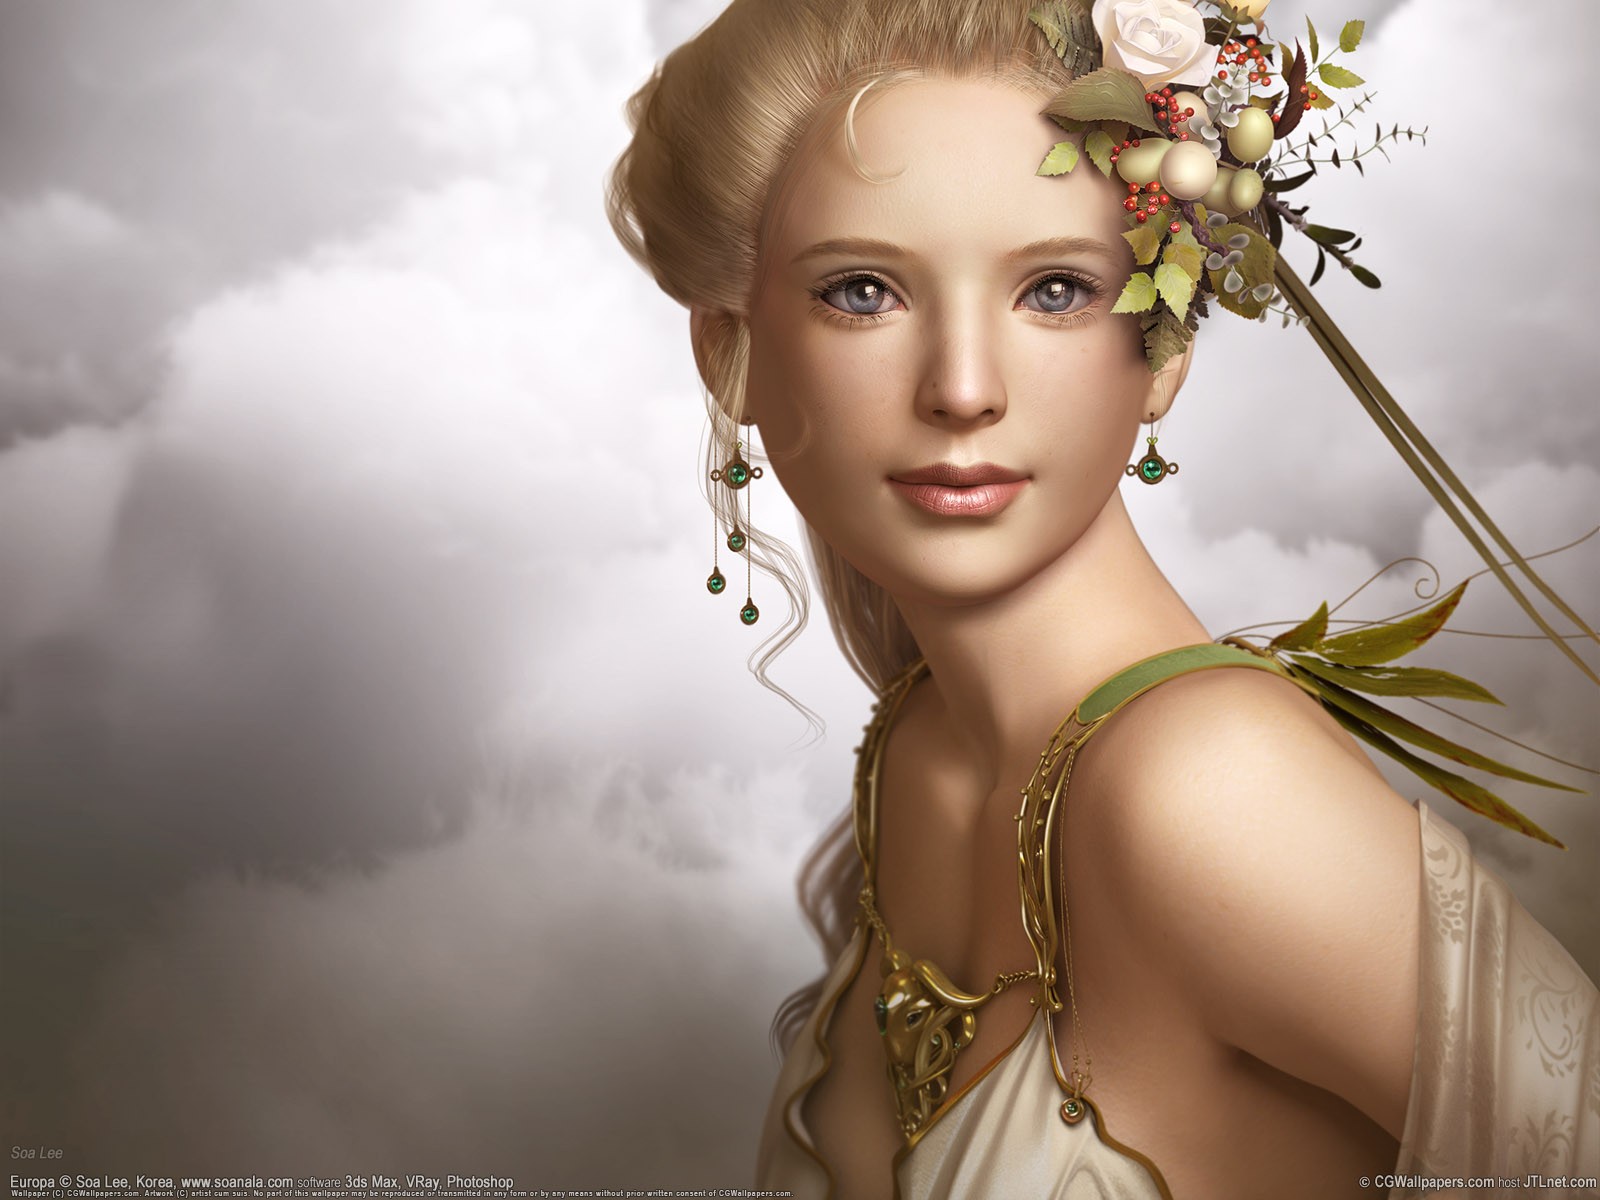 General 1600x1200 digital art fantasy art fantasy girl artwork women watermarked face portrait Soa Lee